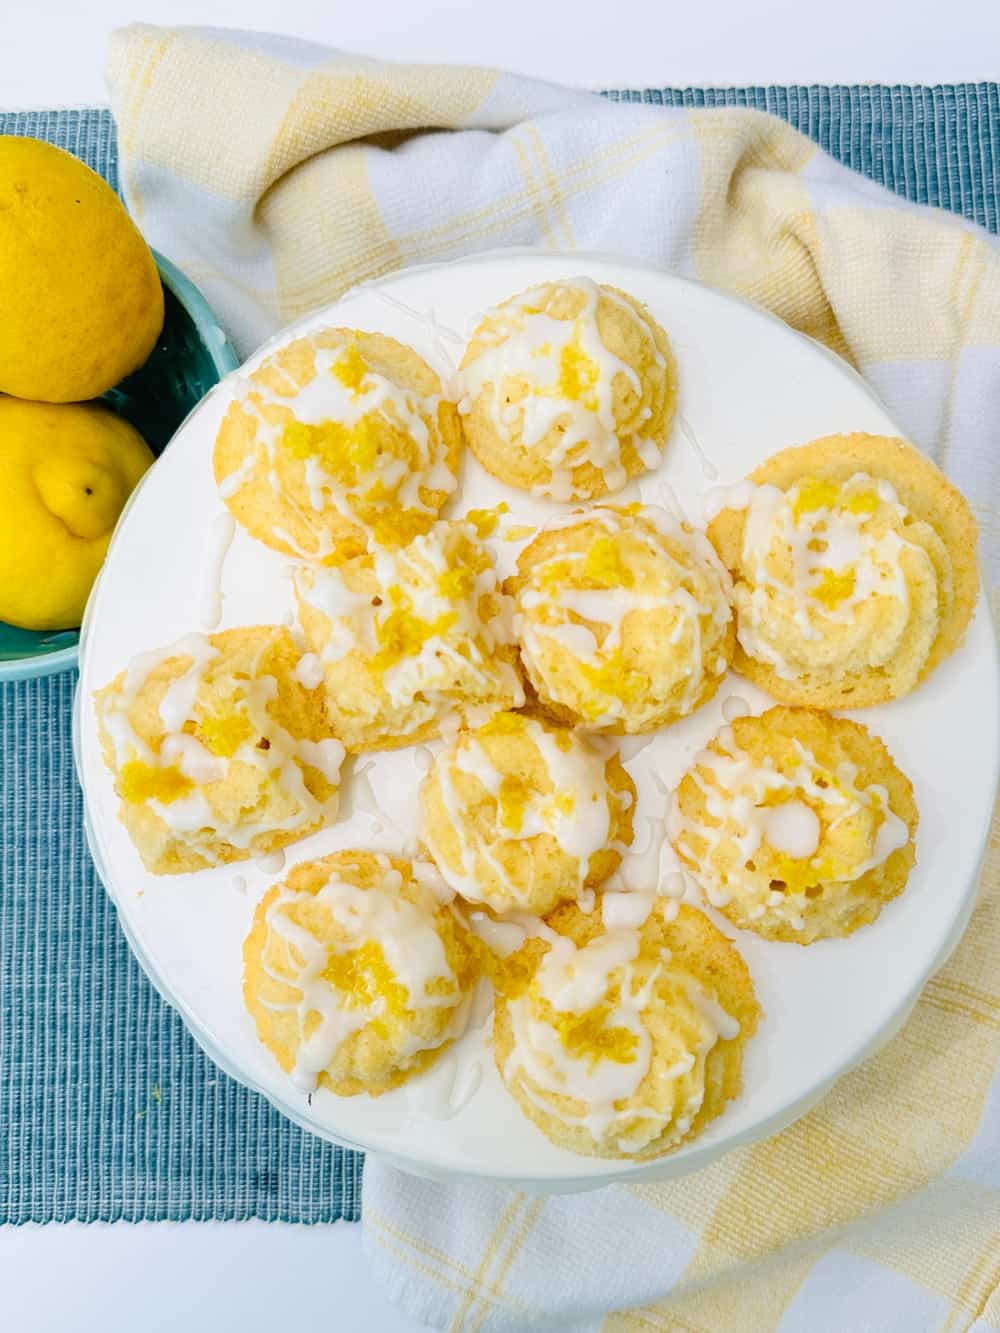 The Easiest Lemon Cake Recipe - Just One Bowl!